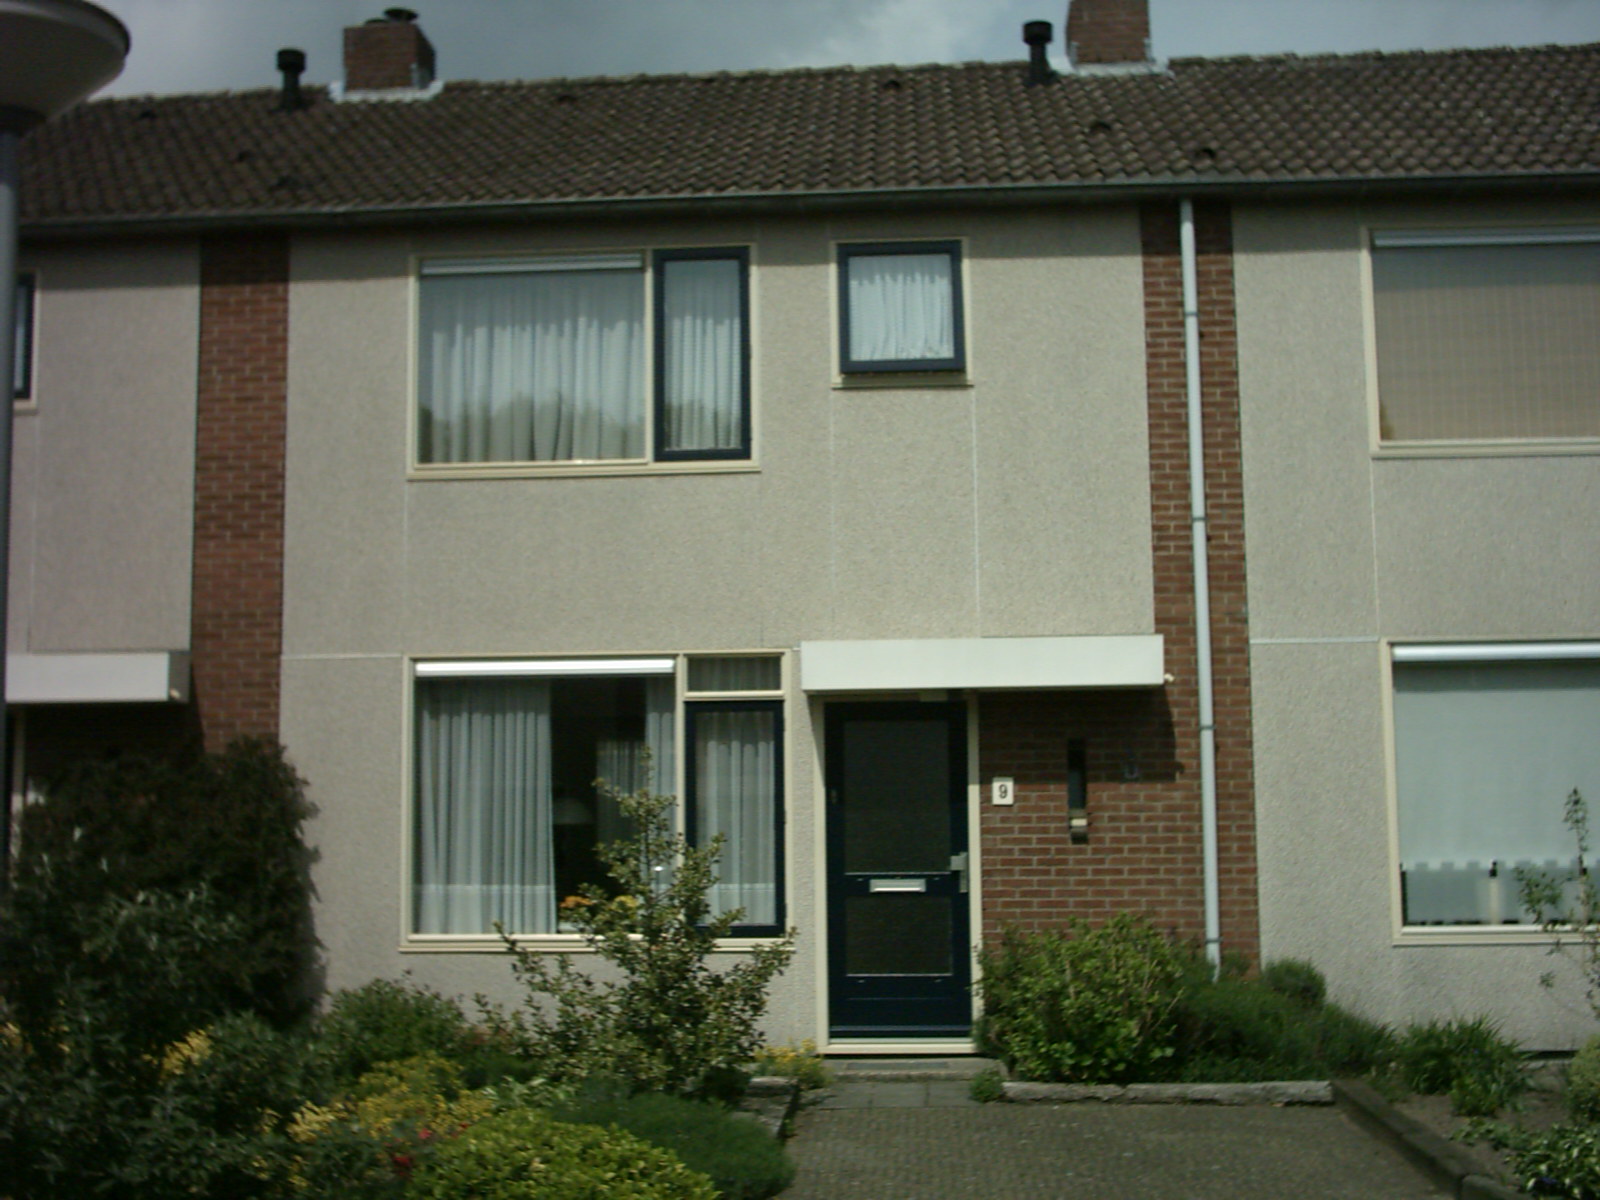 Vinkenstraat 13, 7213 XS Gorssel, Nederland